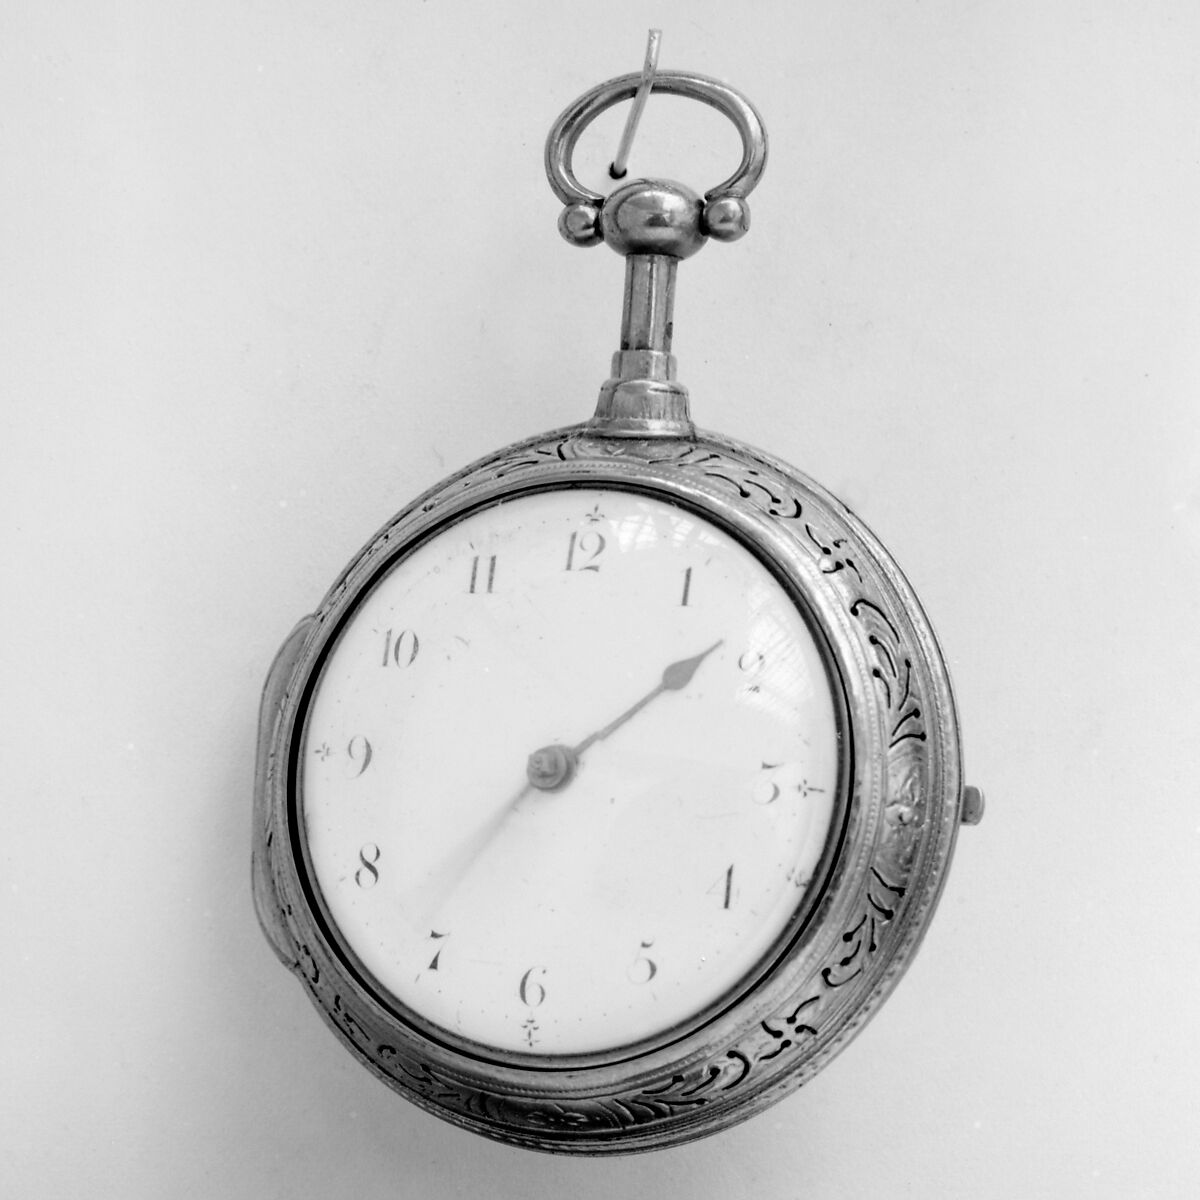 Repeater watch, Watchmaker: T. van Ceulen the Younger (Dutch), Metal, Dutch, The Hague 